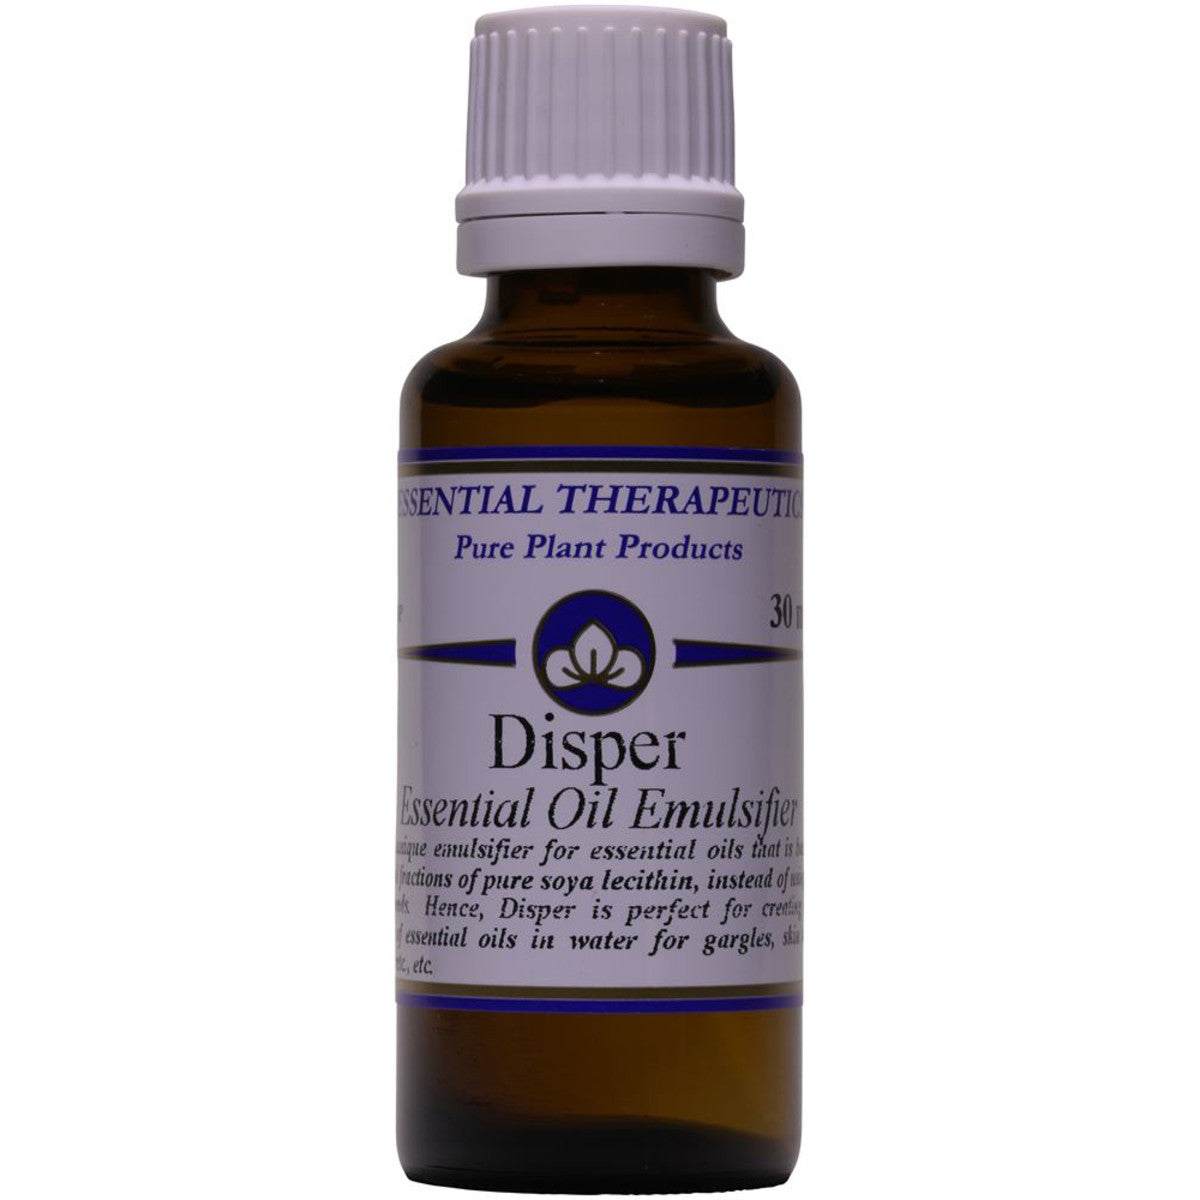 Essential Therapeutic - Disper Emulsifier 30ml